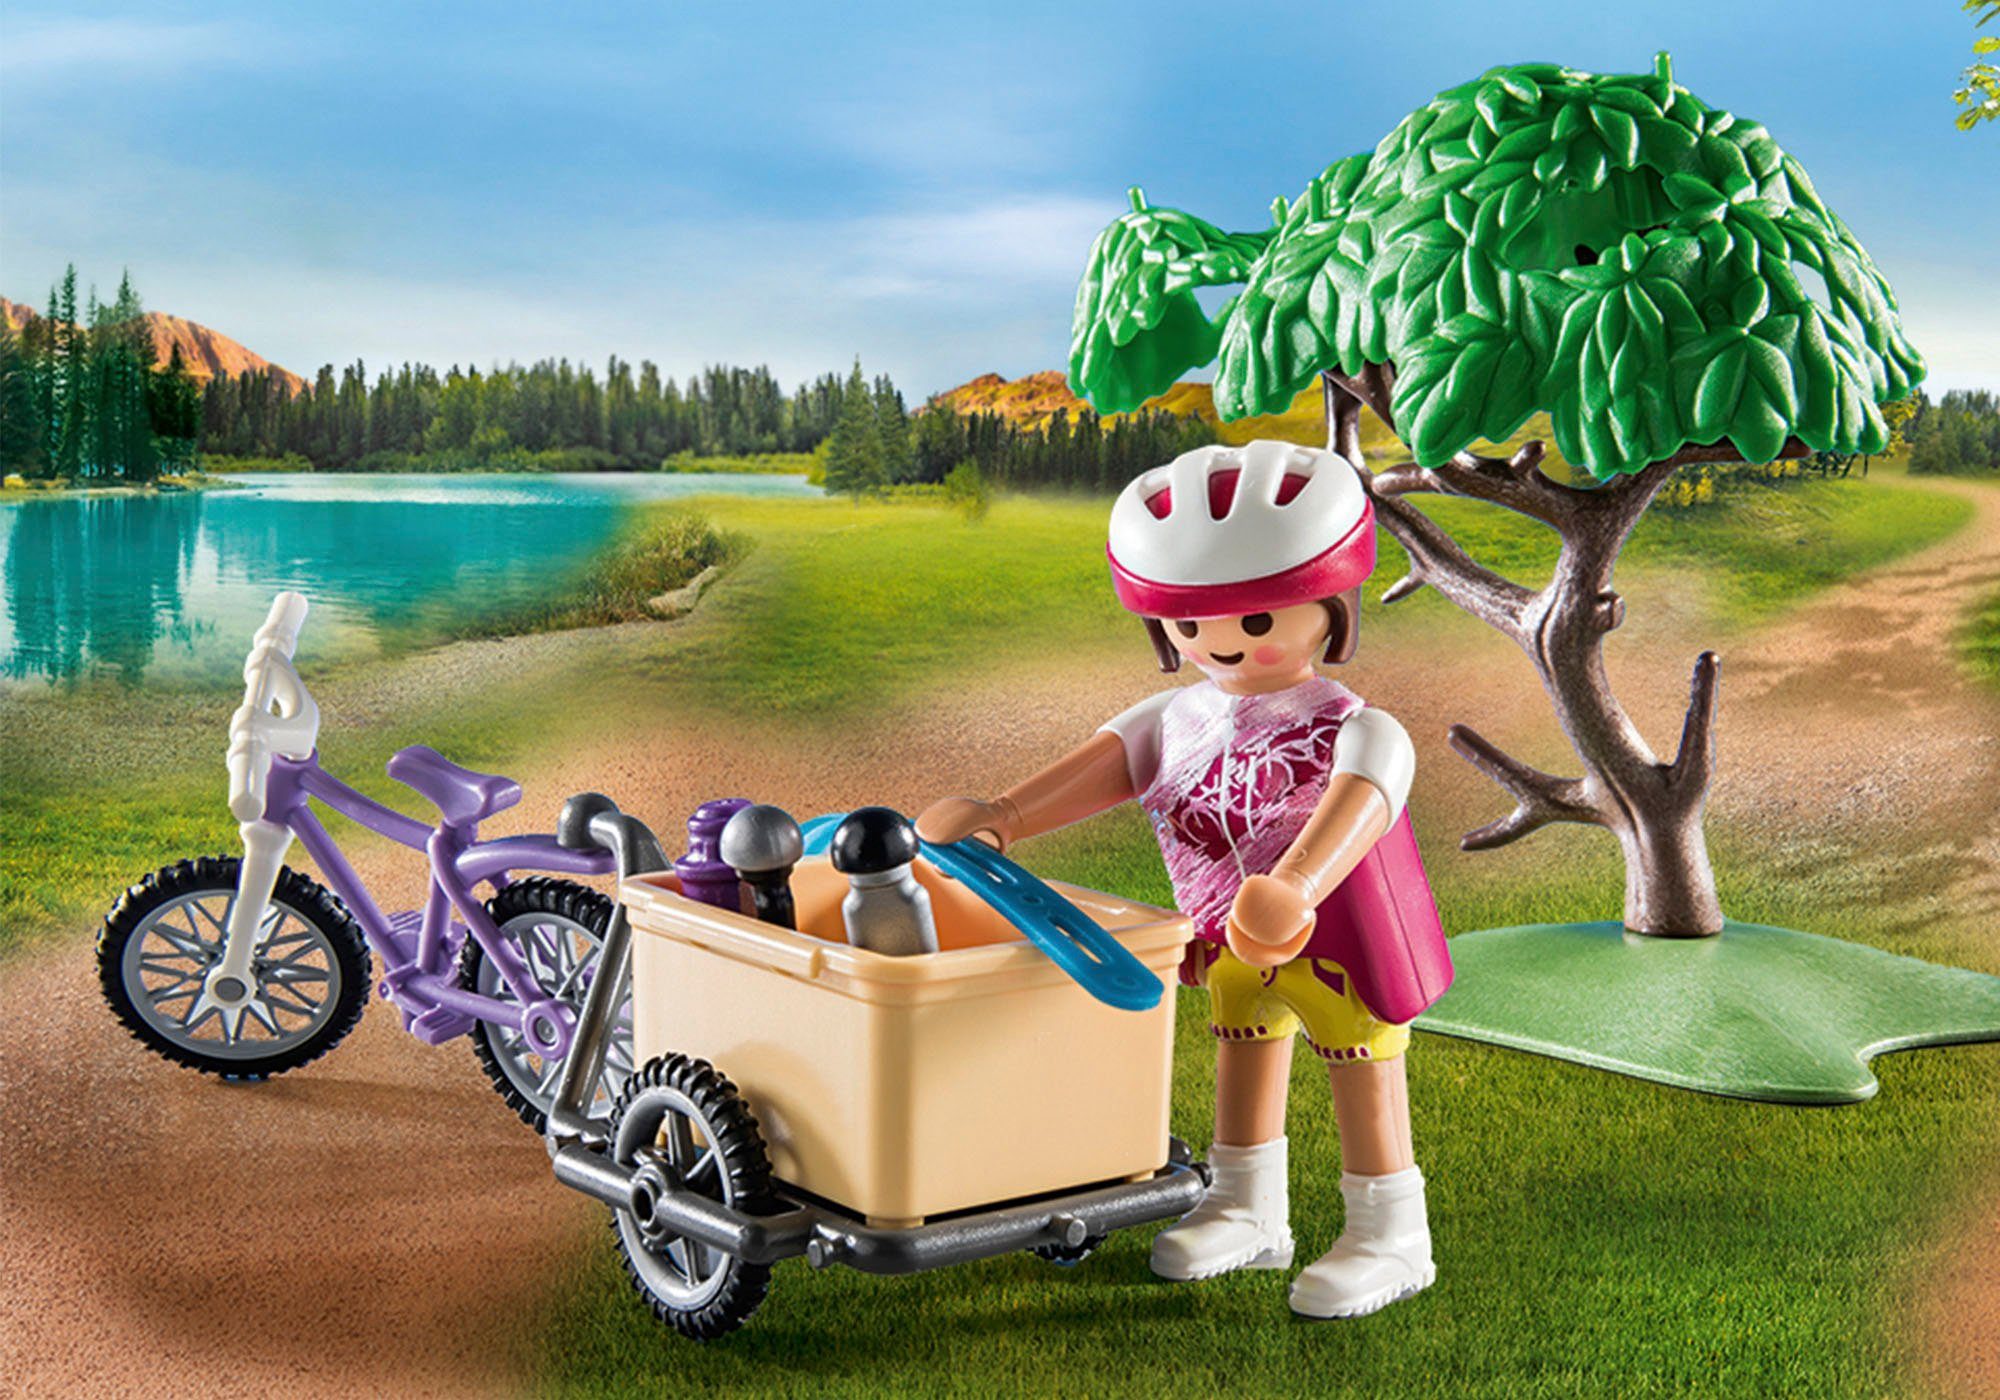 Mountainbike-Tour & Konstruktions-Spielset Family Playmobil® Fun, St) (71426), (52